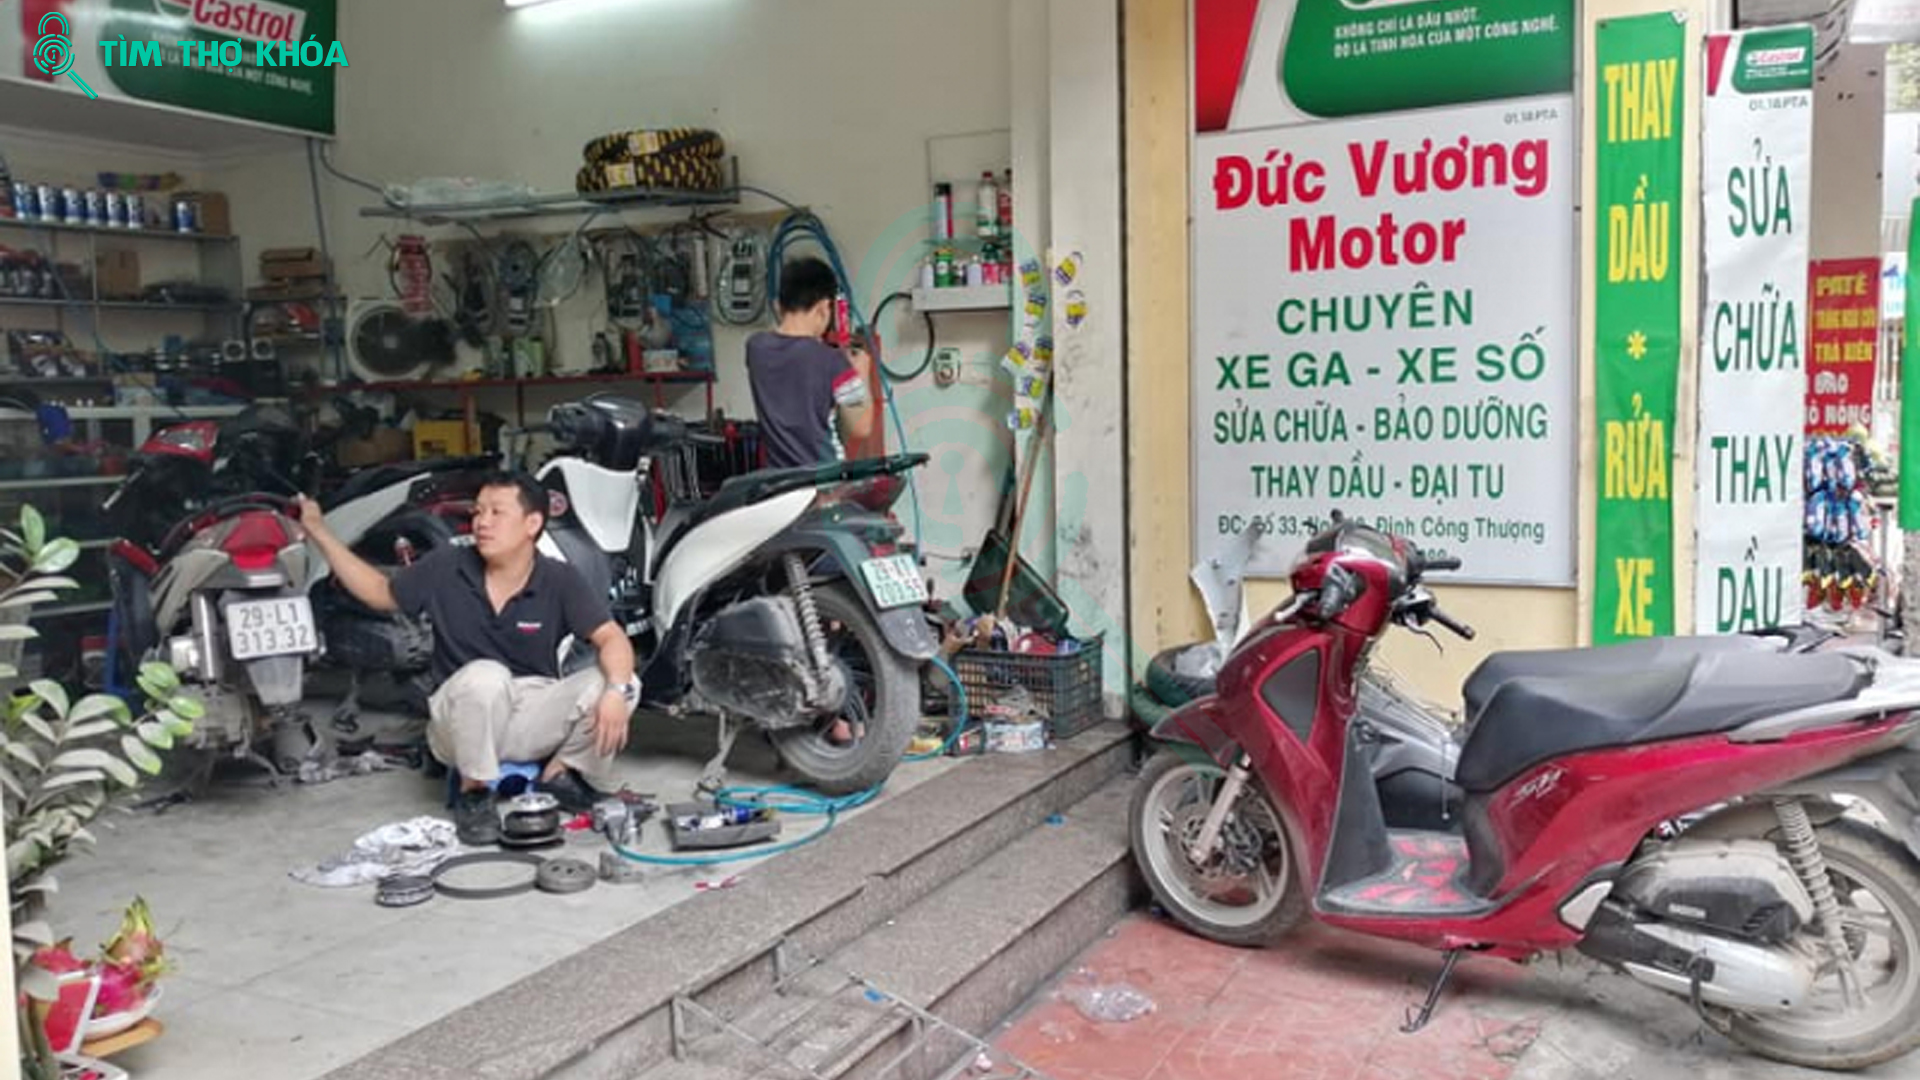 Duc Vuong Motor